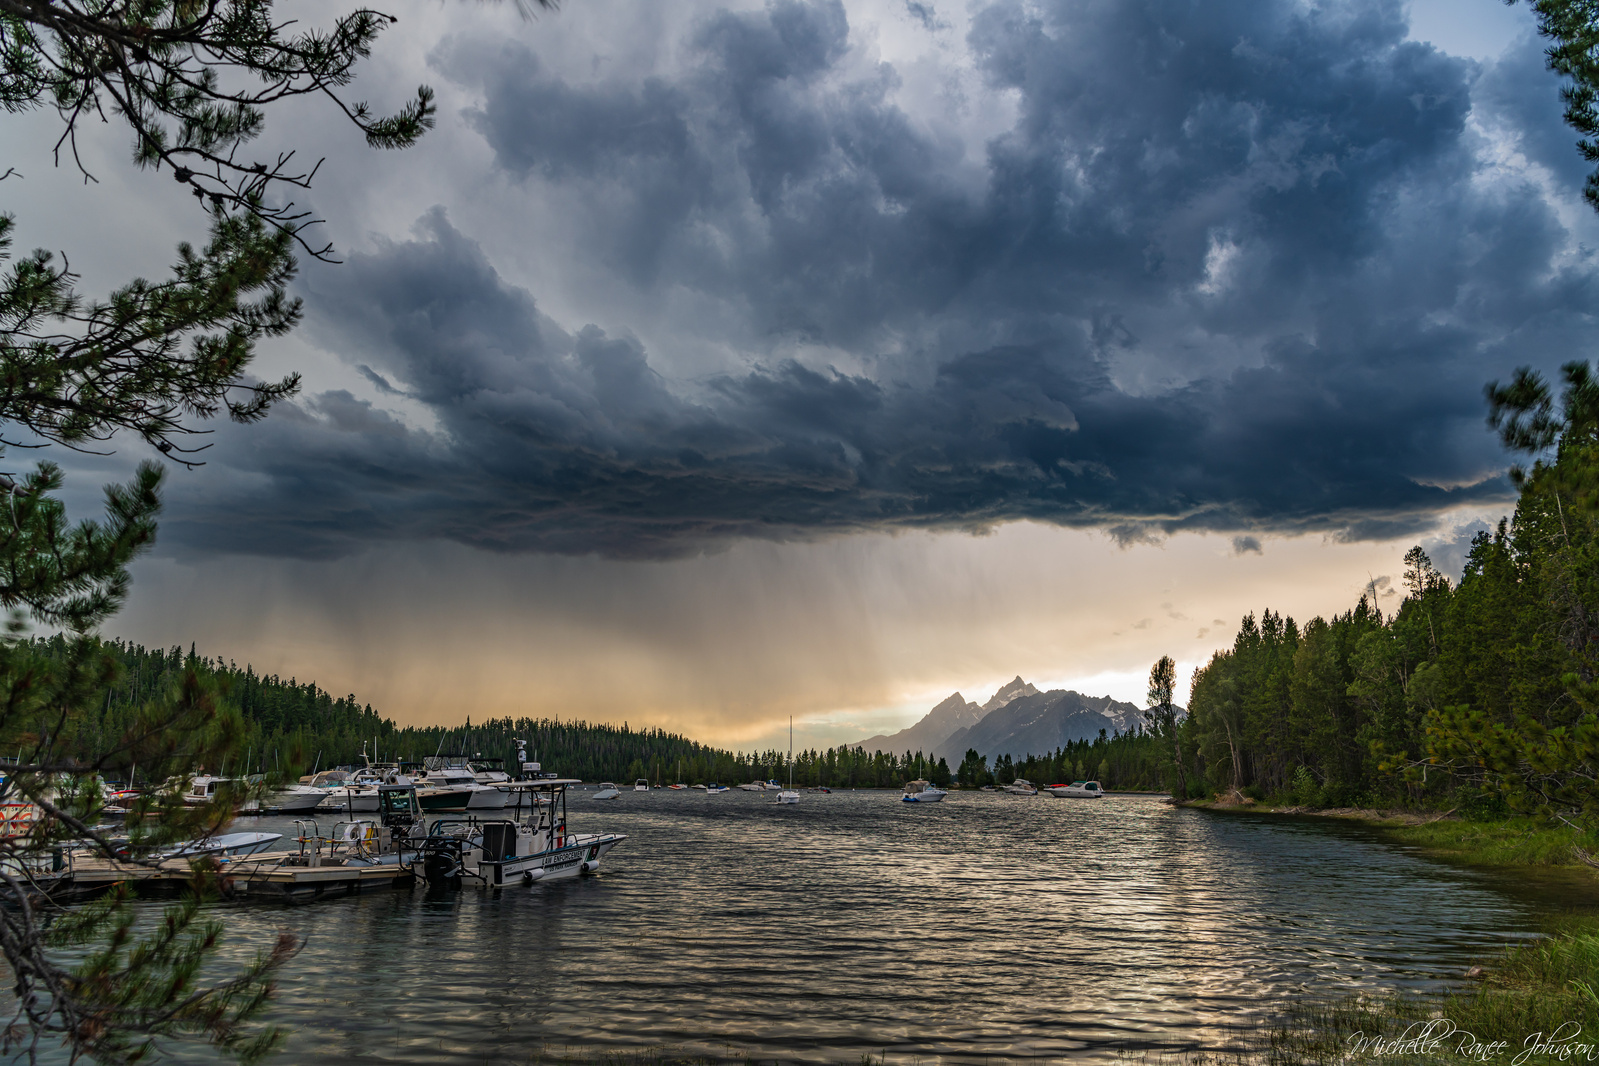 Thunderstorm over the boats at a marina at Grand Teton National Park, Wyoming. Fine Art image.